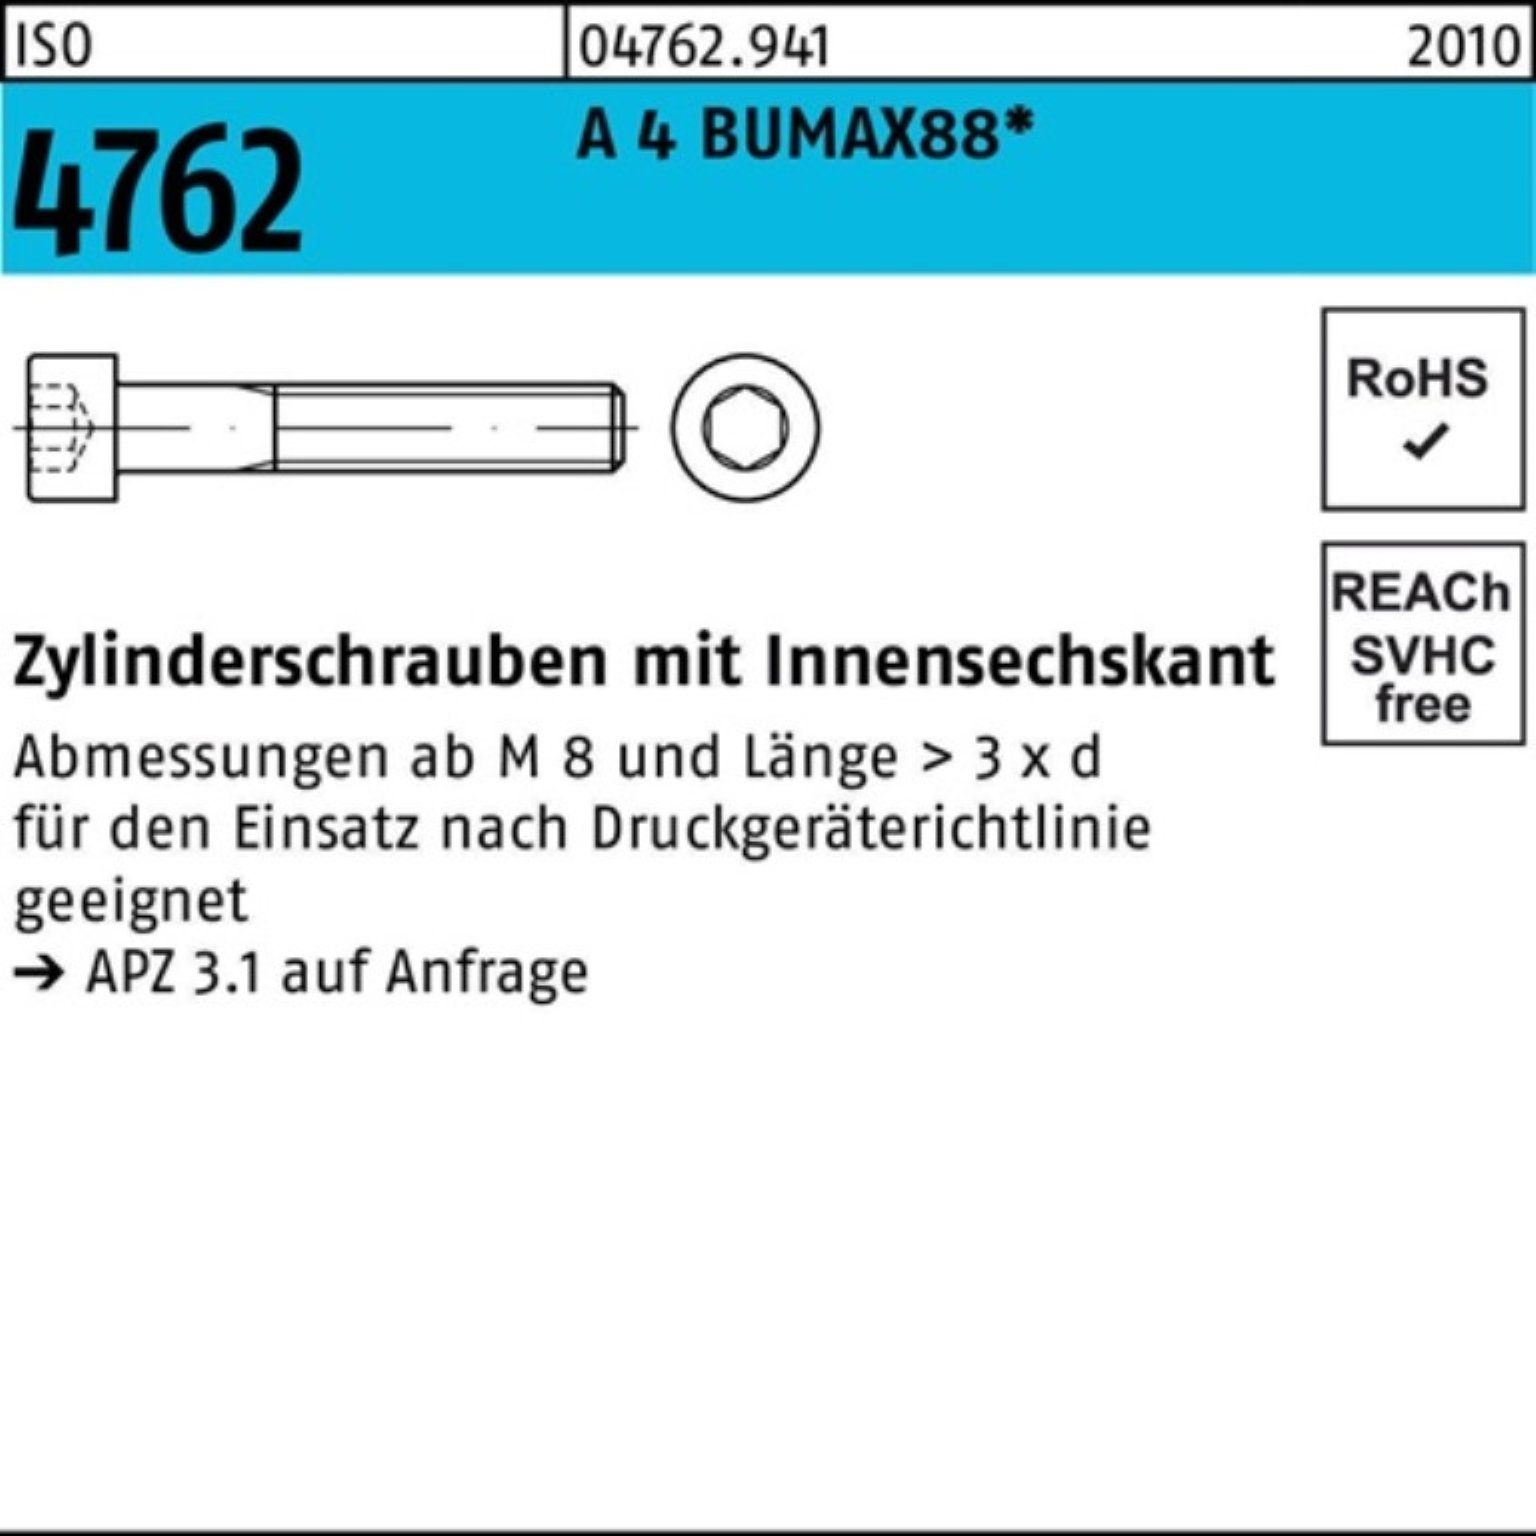 Bufab Zylinderschraube 100er Pack Zylinderschraube ISO 4762 Innen-6kt M10x 40 A 4 BUMAX88 50